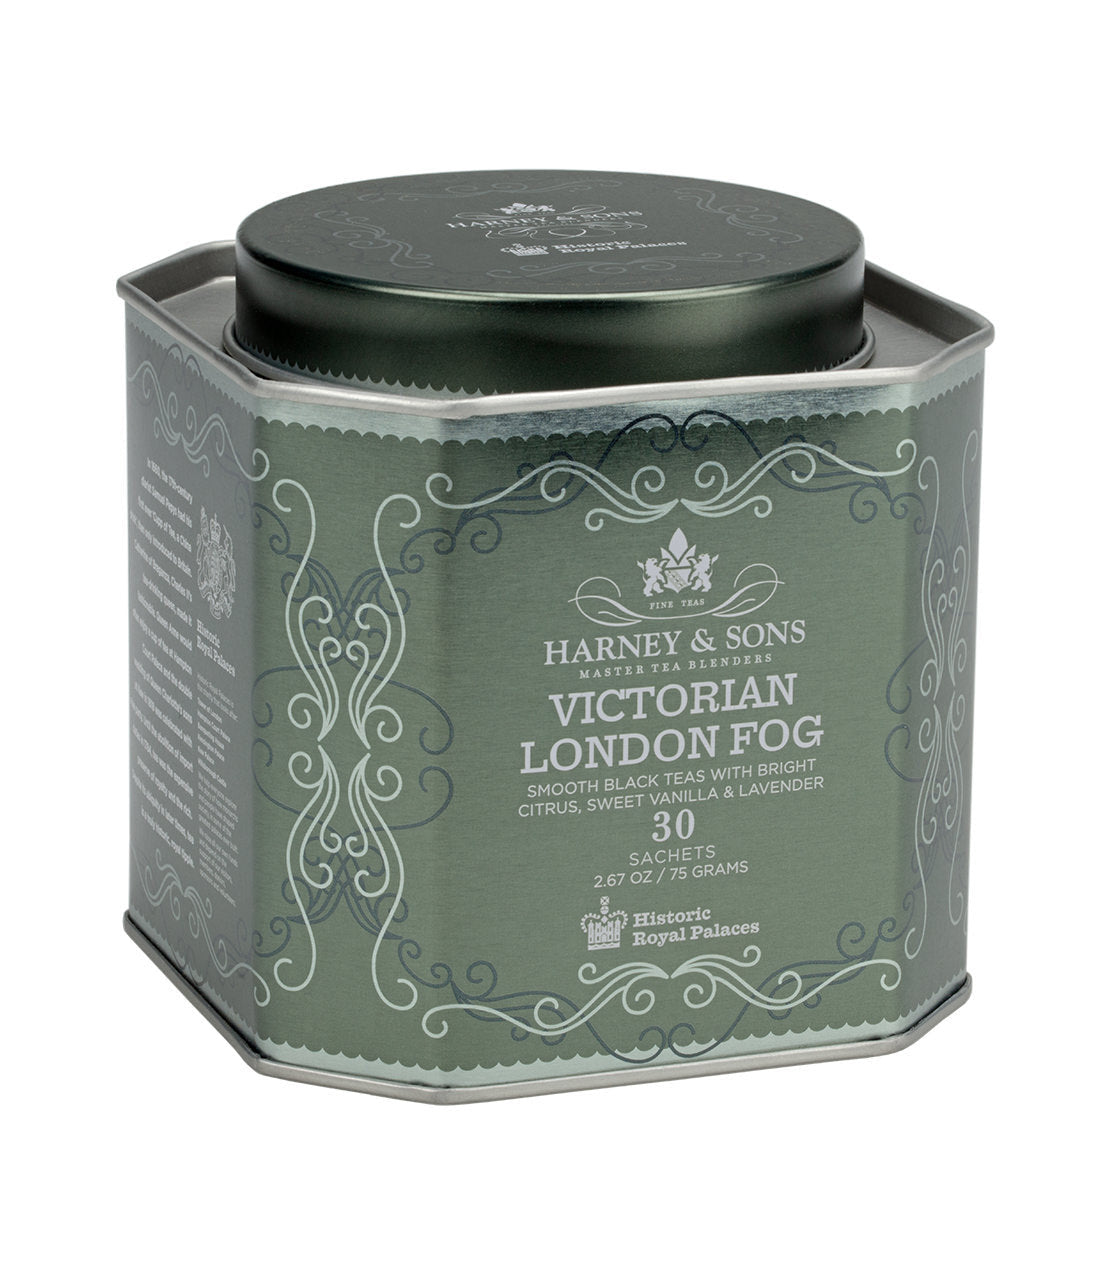 Victorian London Fog Tea by Harney & Sons.